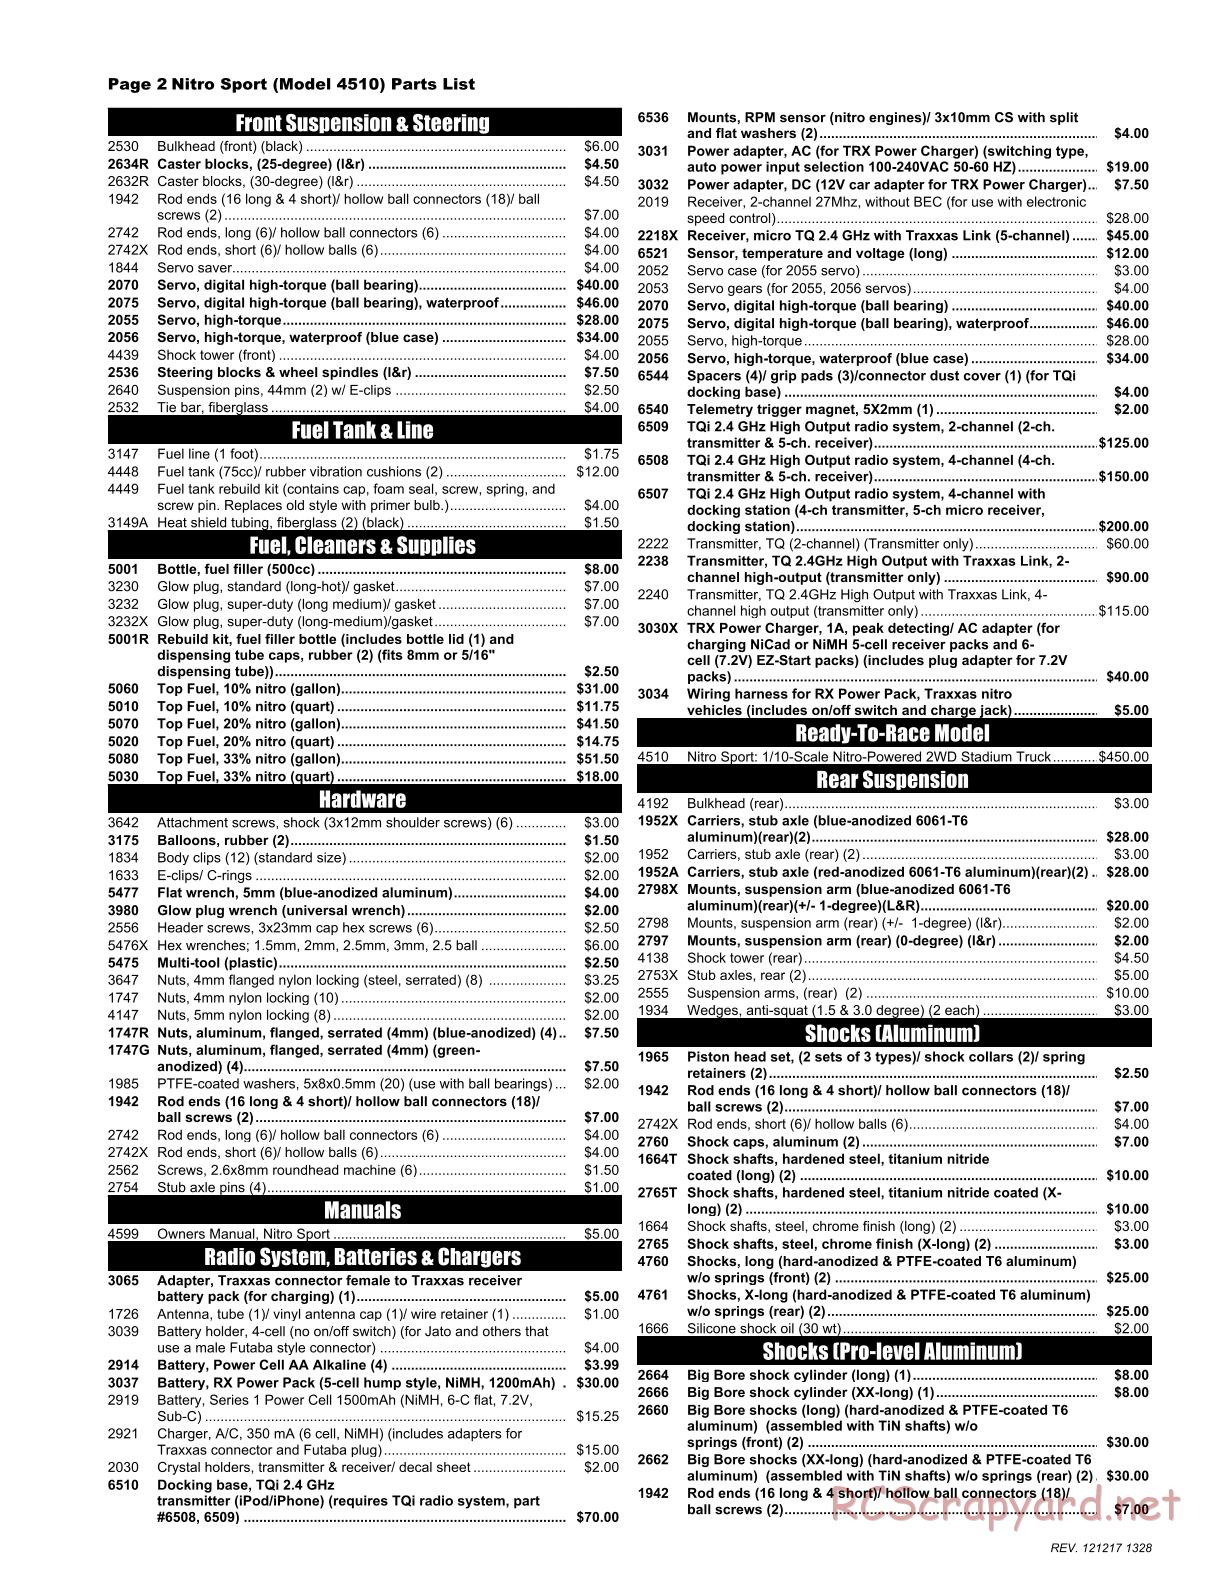 Traxxas - Nitro Sport - Parts List - Page 2